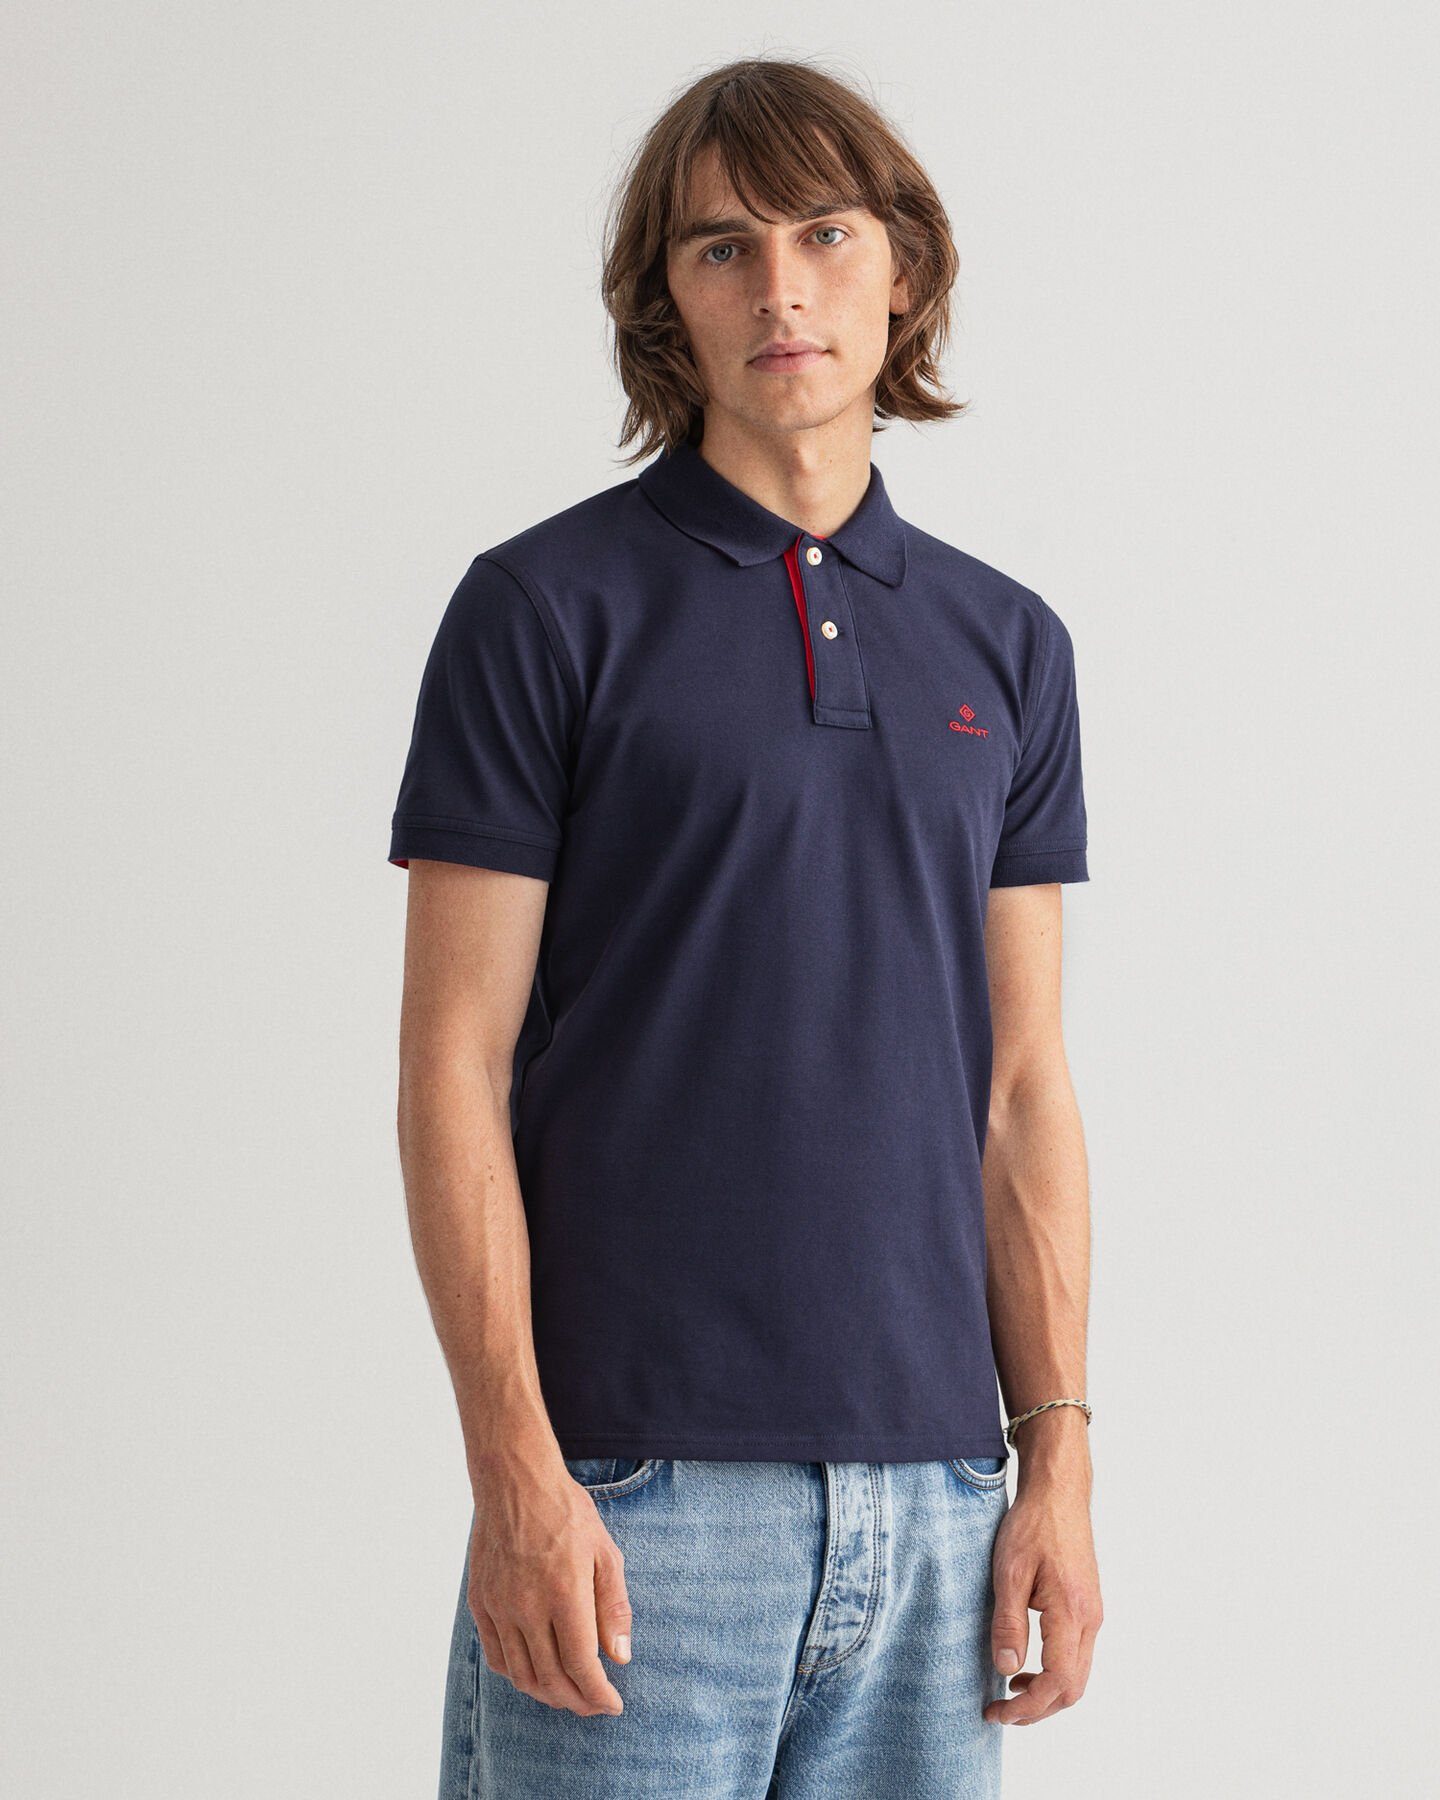 Gant Shirt kontrastfarbener Poloshirt Piqué Poloshirt Rugger mit Dunkelblau